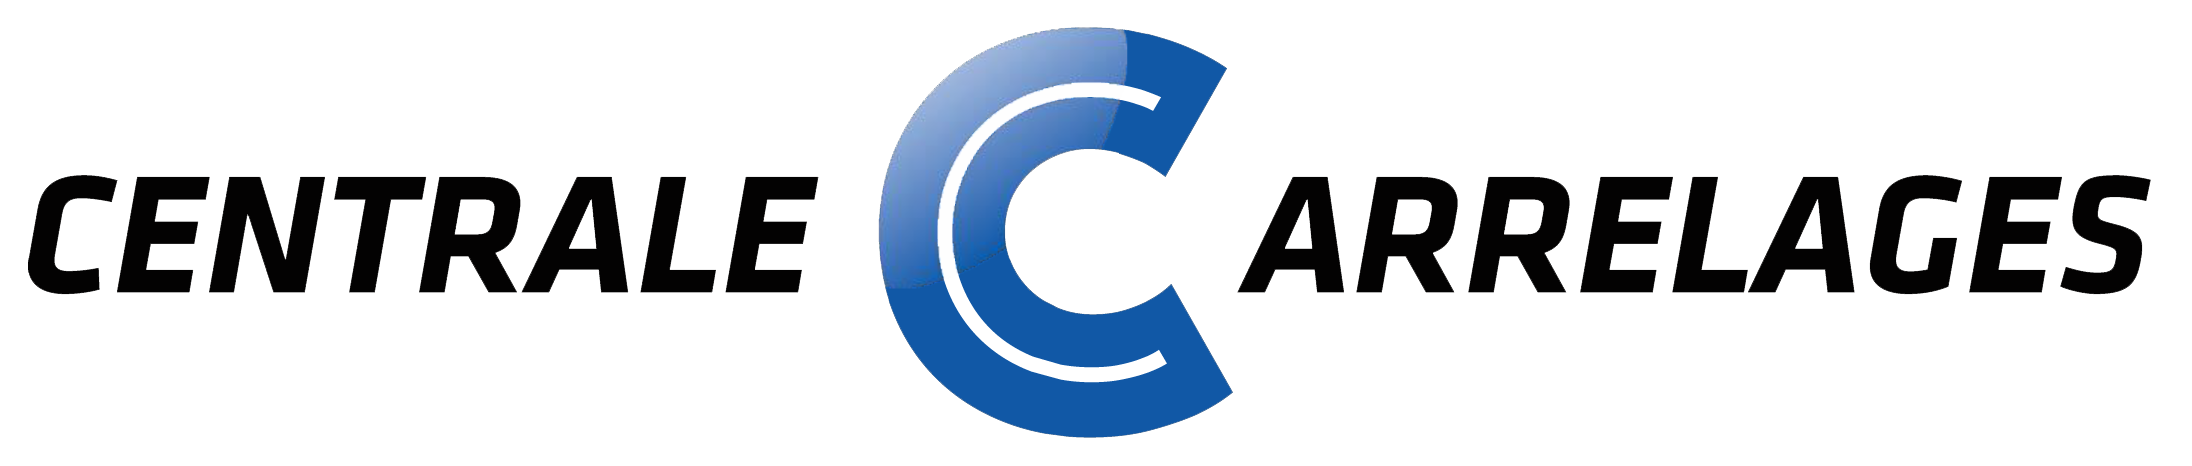 Centrale Carrelages Logo